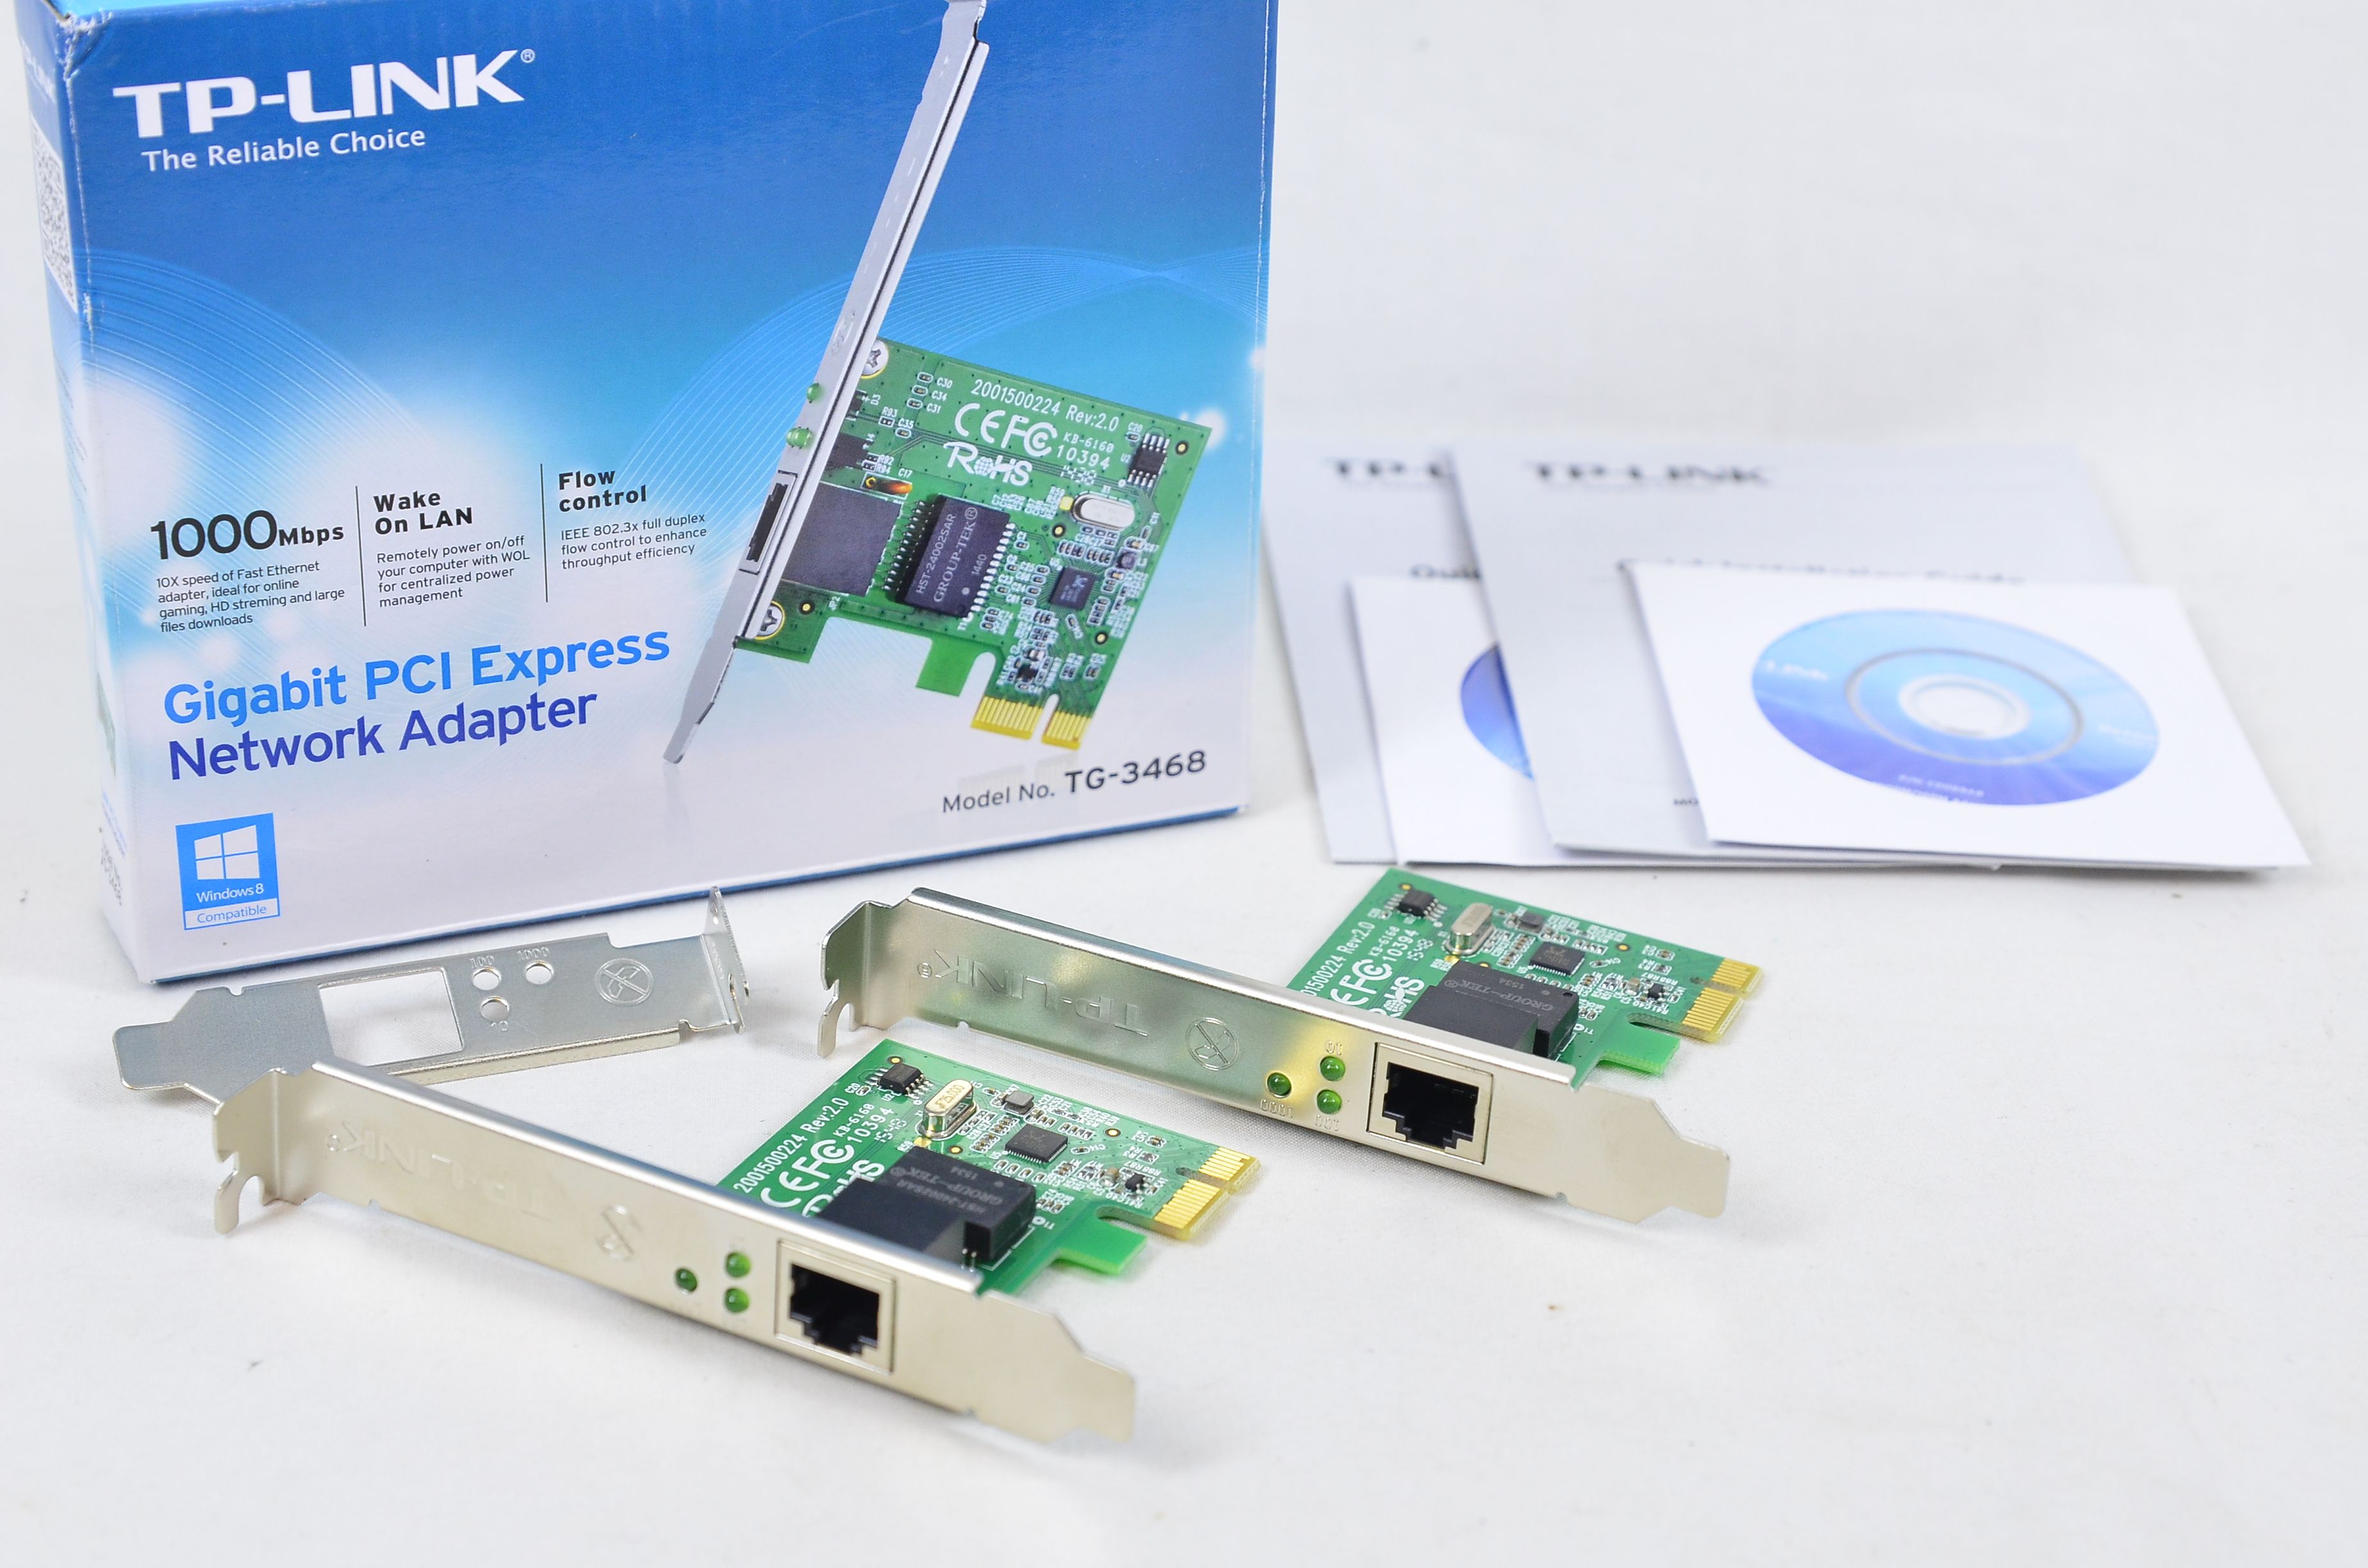 Gigabit PCI Express Network Adapter (TL-TG 3468)